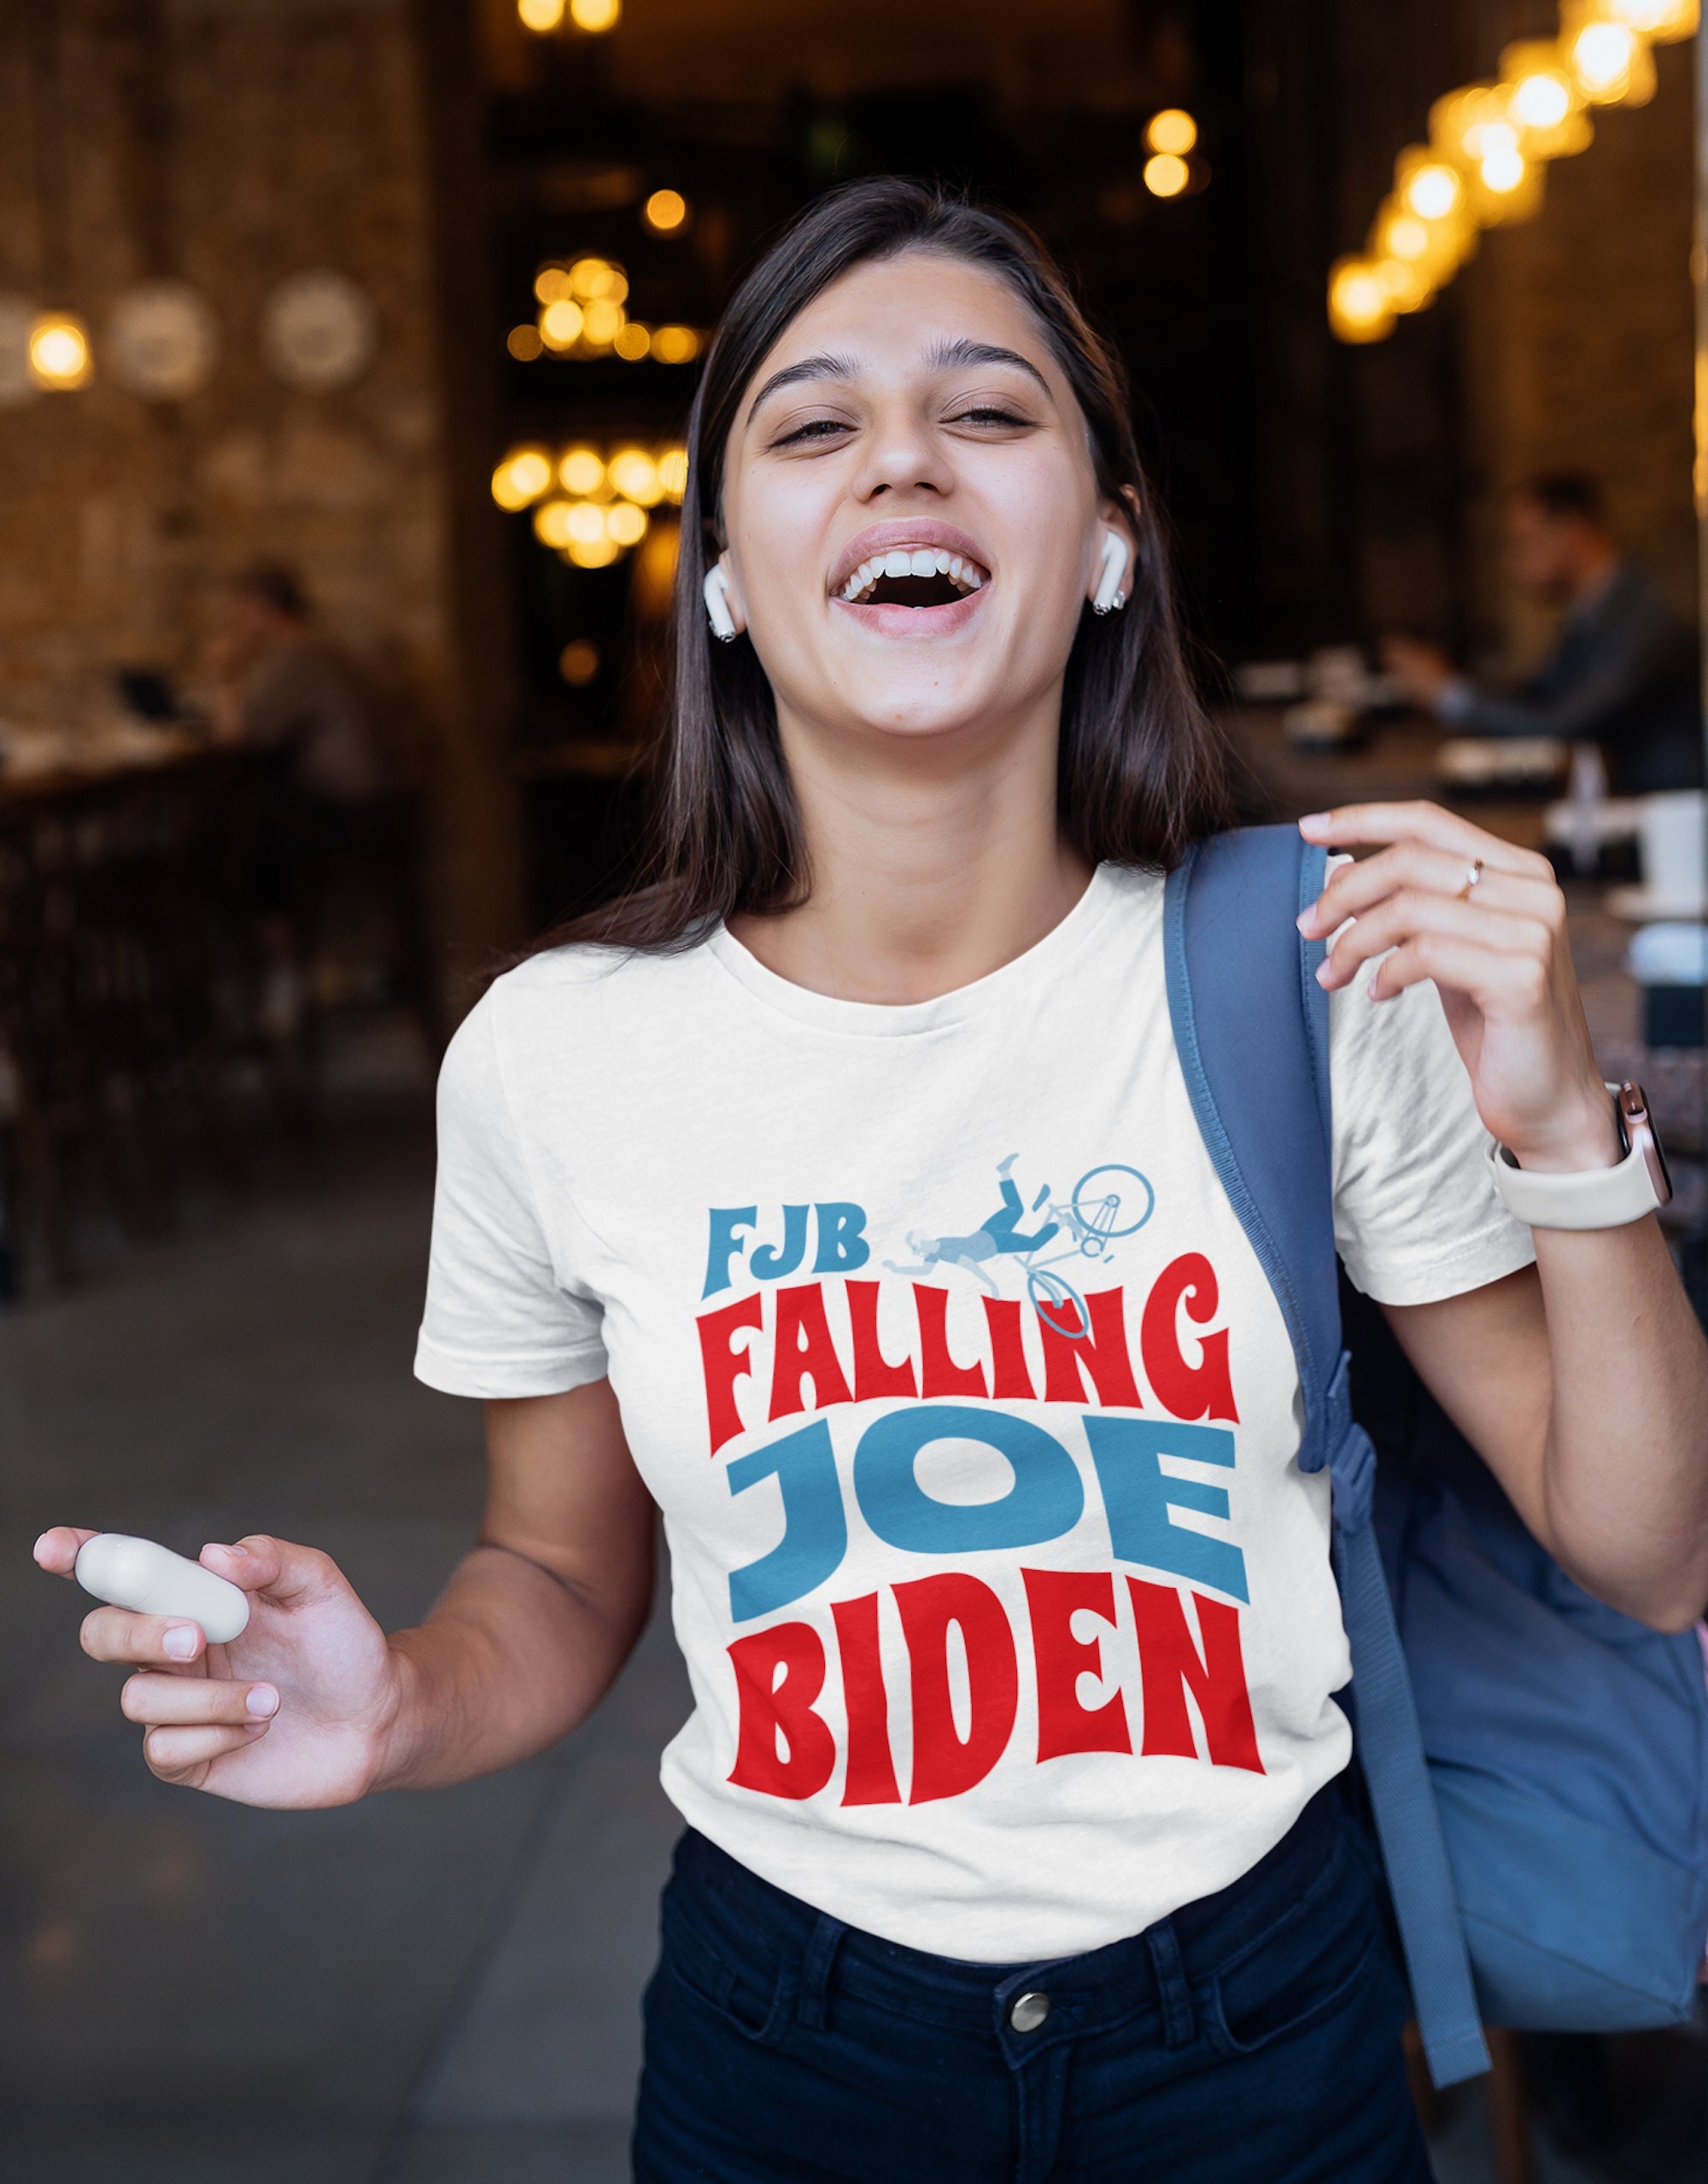 Joe Biden Falling Bicycle #FJB Falling Joe Biden Shirt